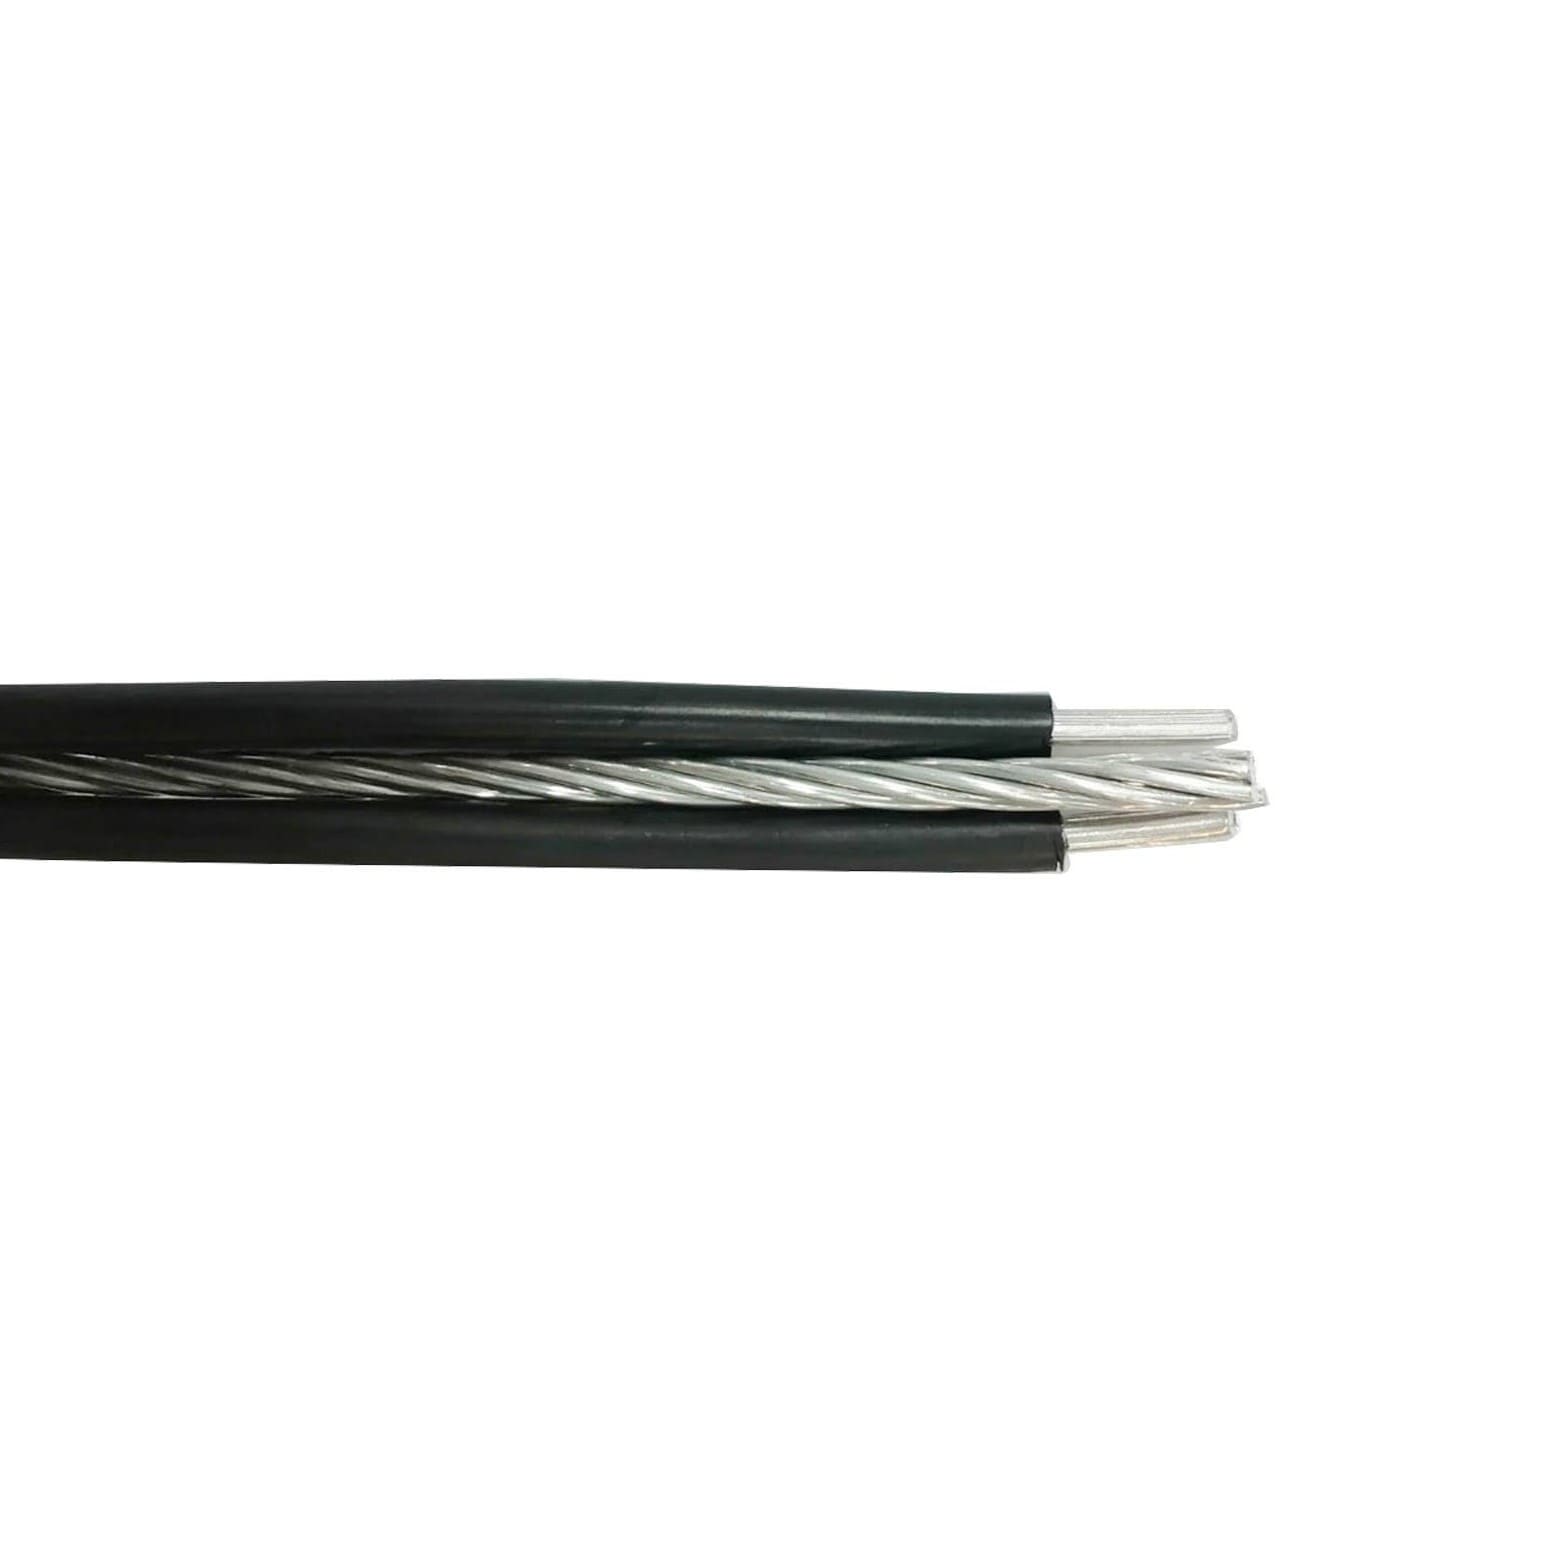 Cables Direct - Cable de altavoz para exteriores calibre 14, 250 pies, 4  conductores, aluminio revestido de cobre, cable de audio trenzado a granel  